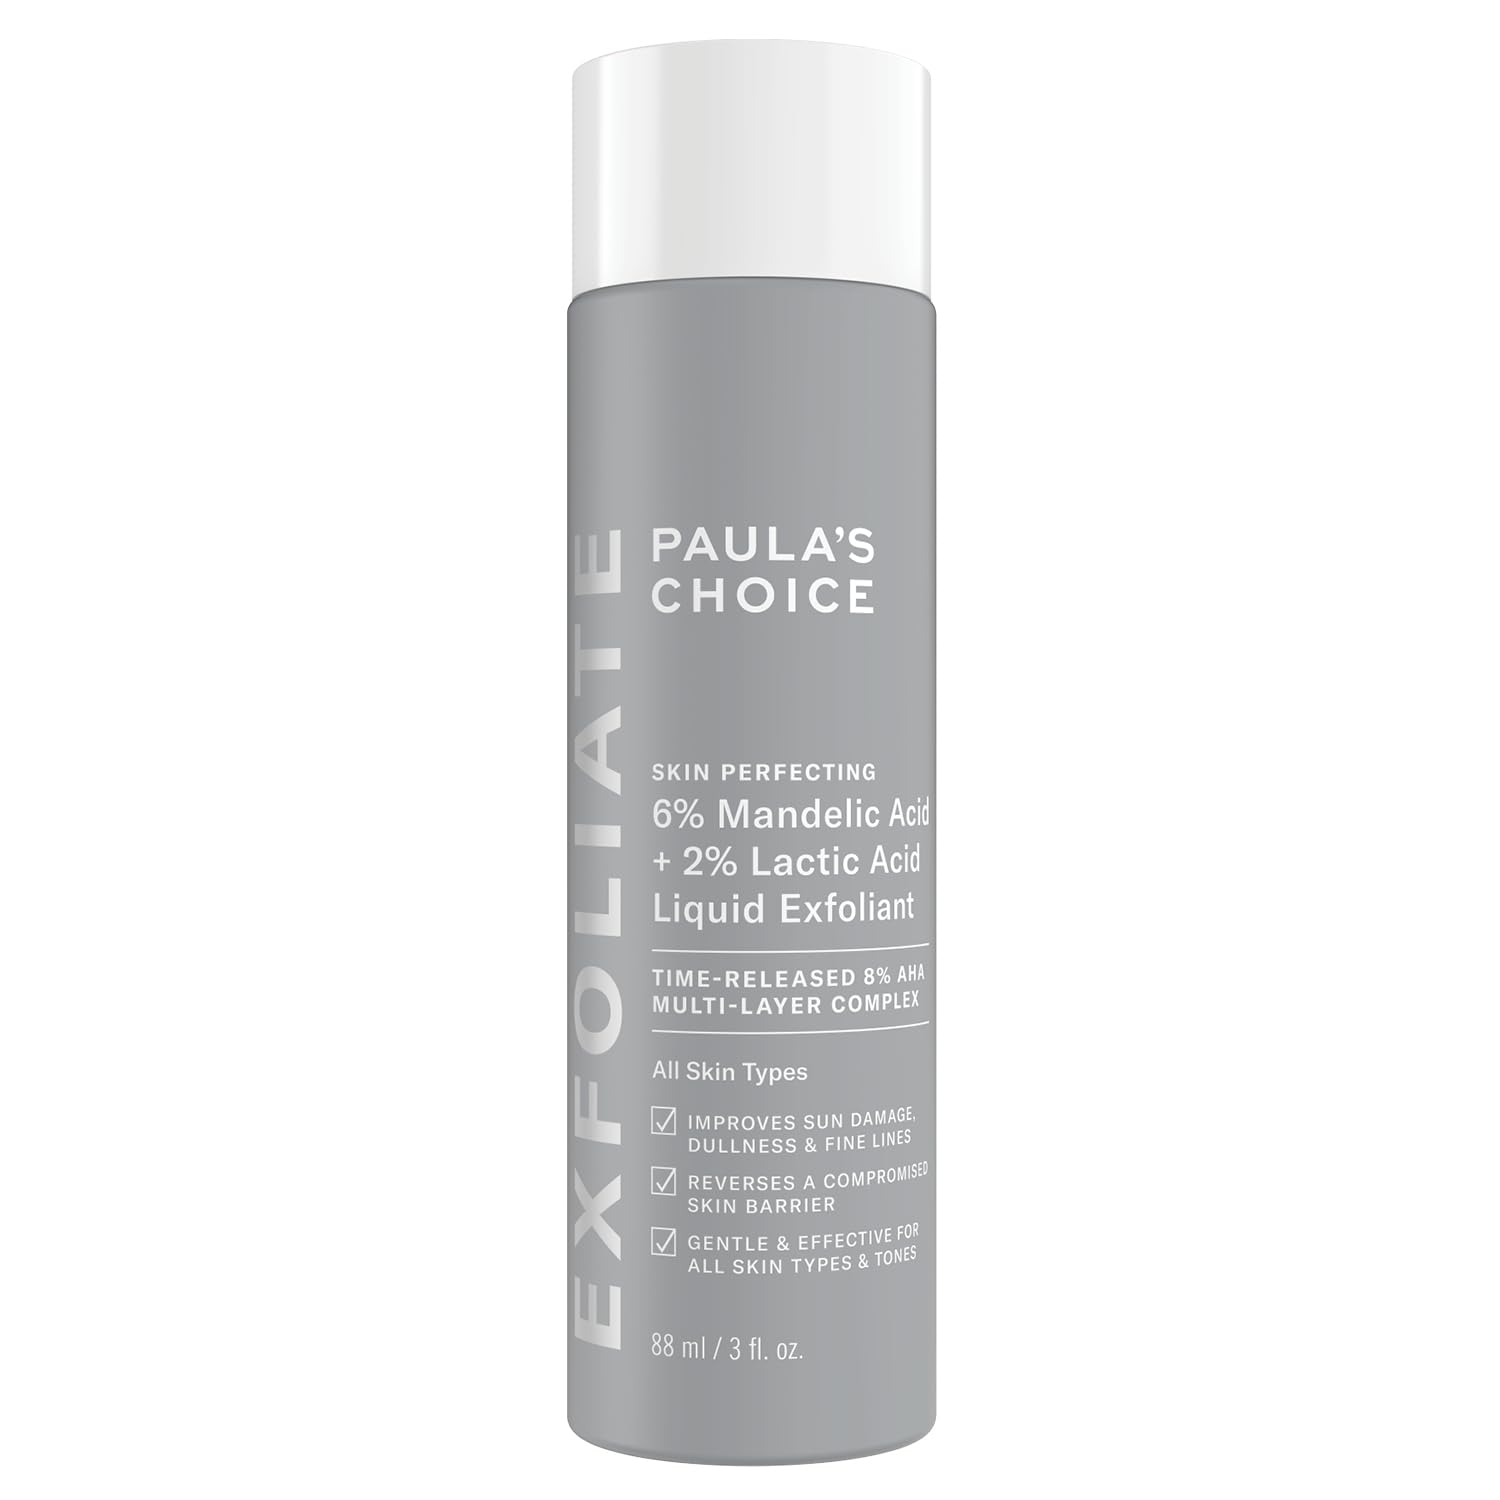 Paula \ 'S Choice Skin Perfecting 6% Mandelic Acid + 2% Lactic Acid Aha - Aha Peeling - Visibly Reduces Fine Lines and Wrinkles - With Mandelic Acid & Lactic Acid - All Skin Types - 88 ml